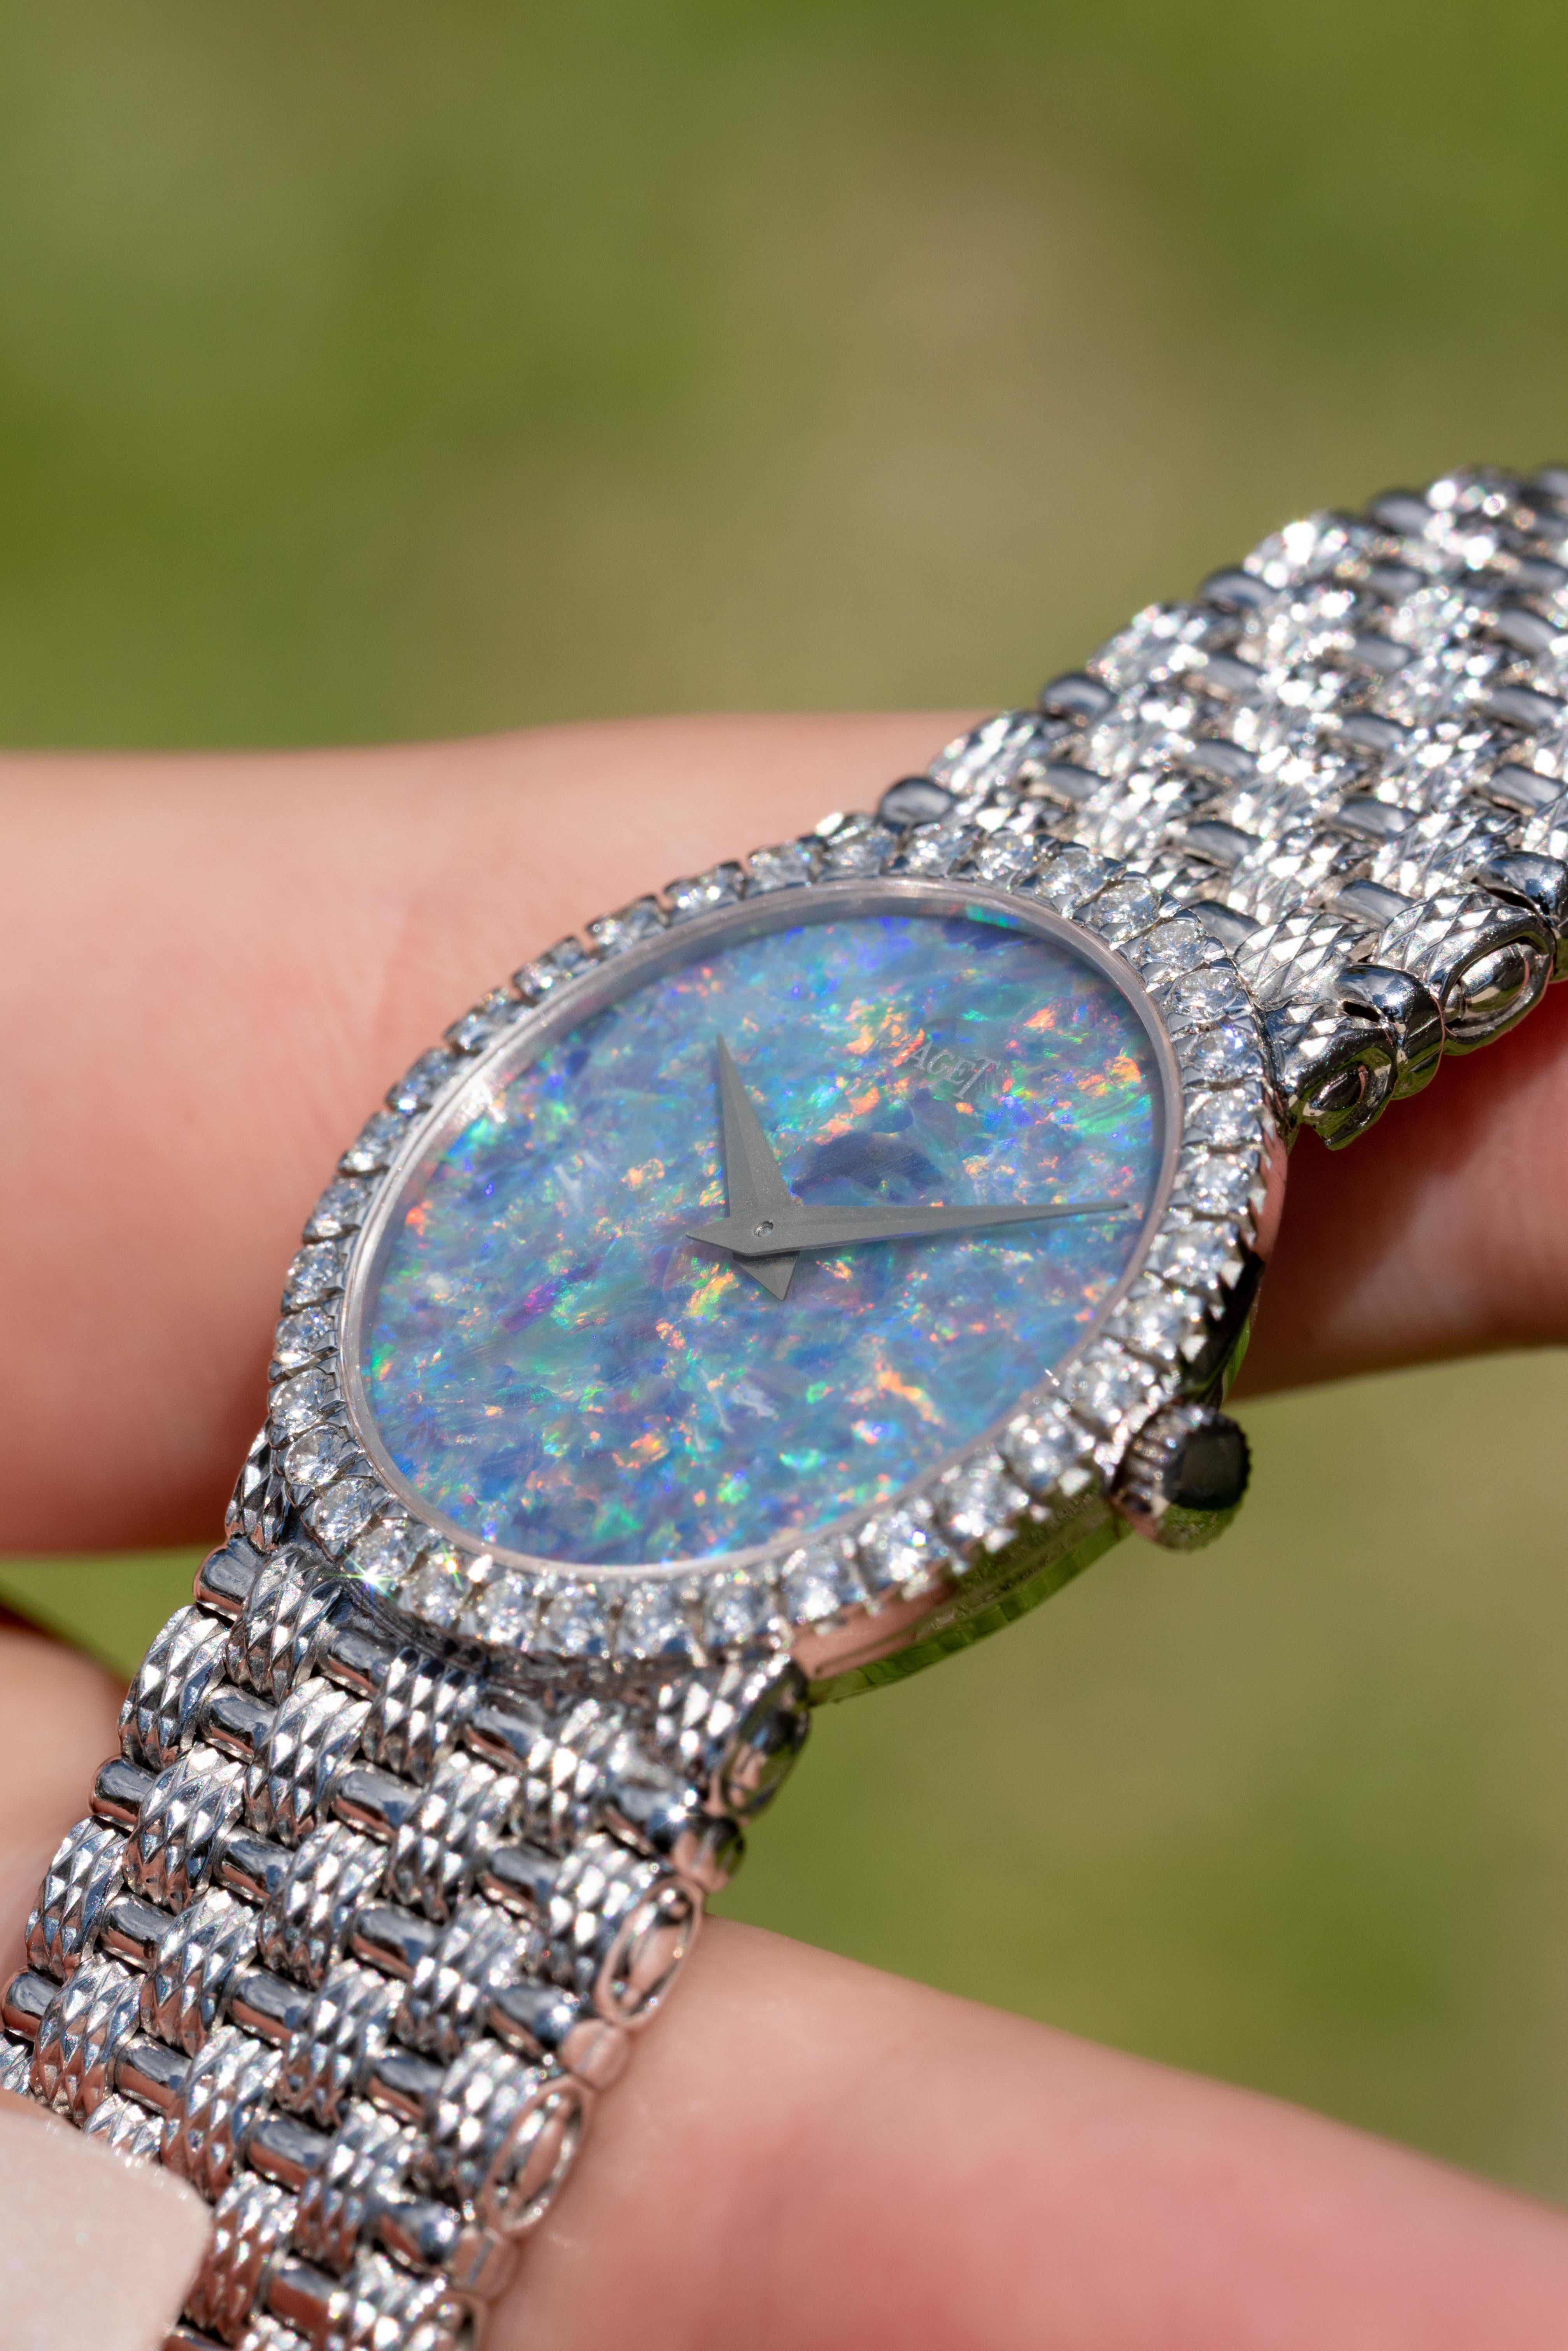 Piaget 9706D23 18k White Gold Opal Dial Diamond Ladies Watch For Sale 1